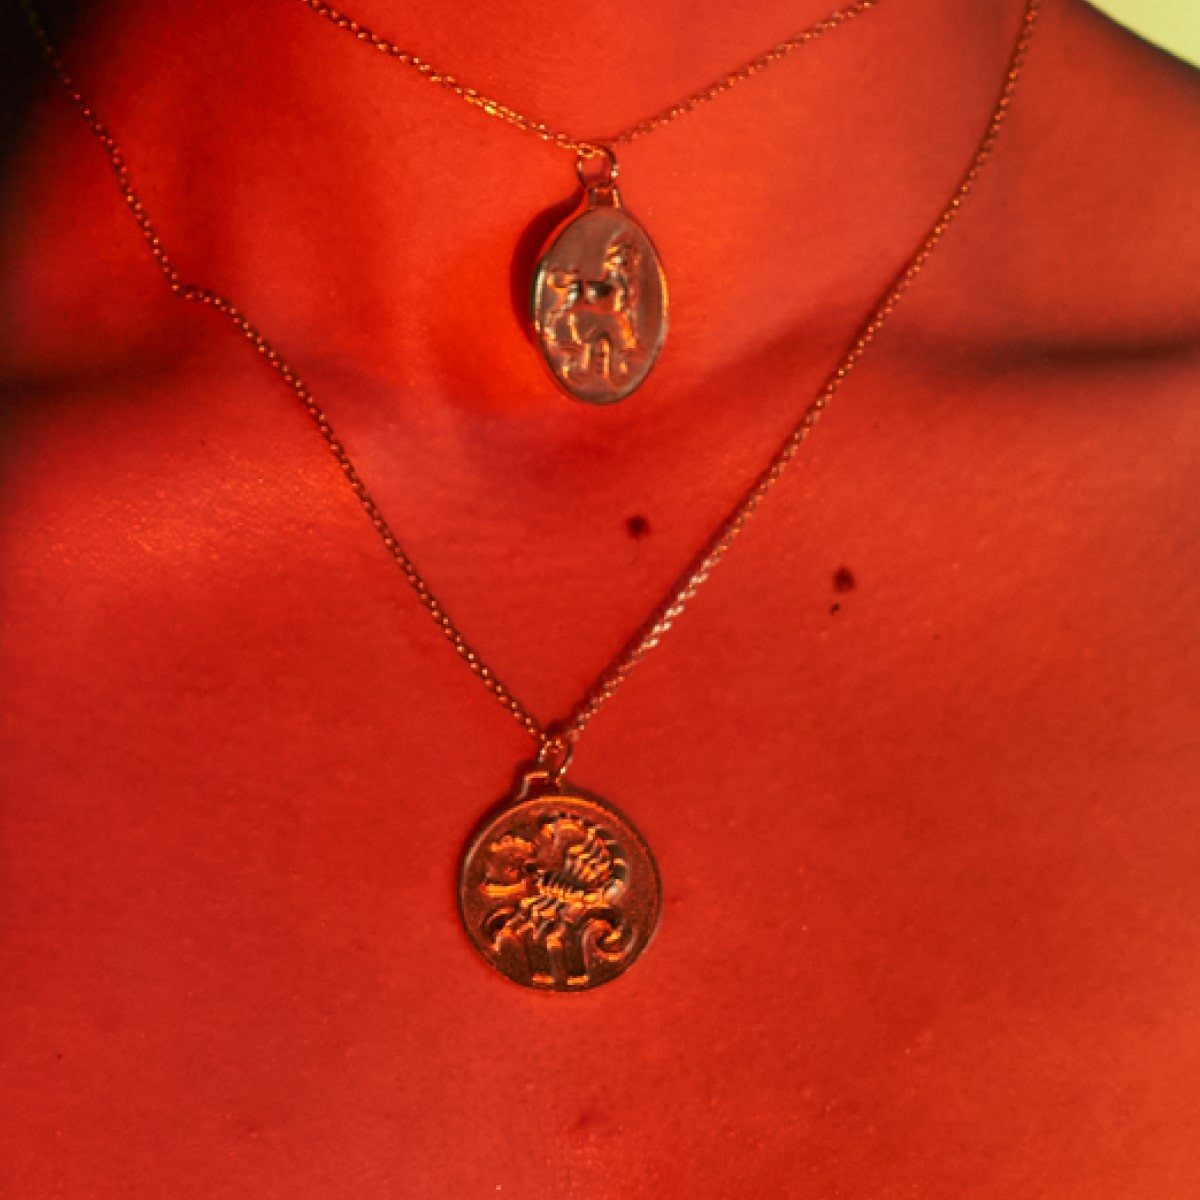 Zodiac Libra Medallion Silver - Halsketten - Silber